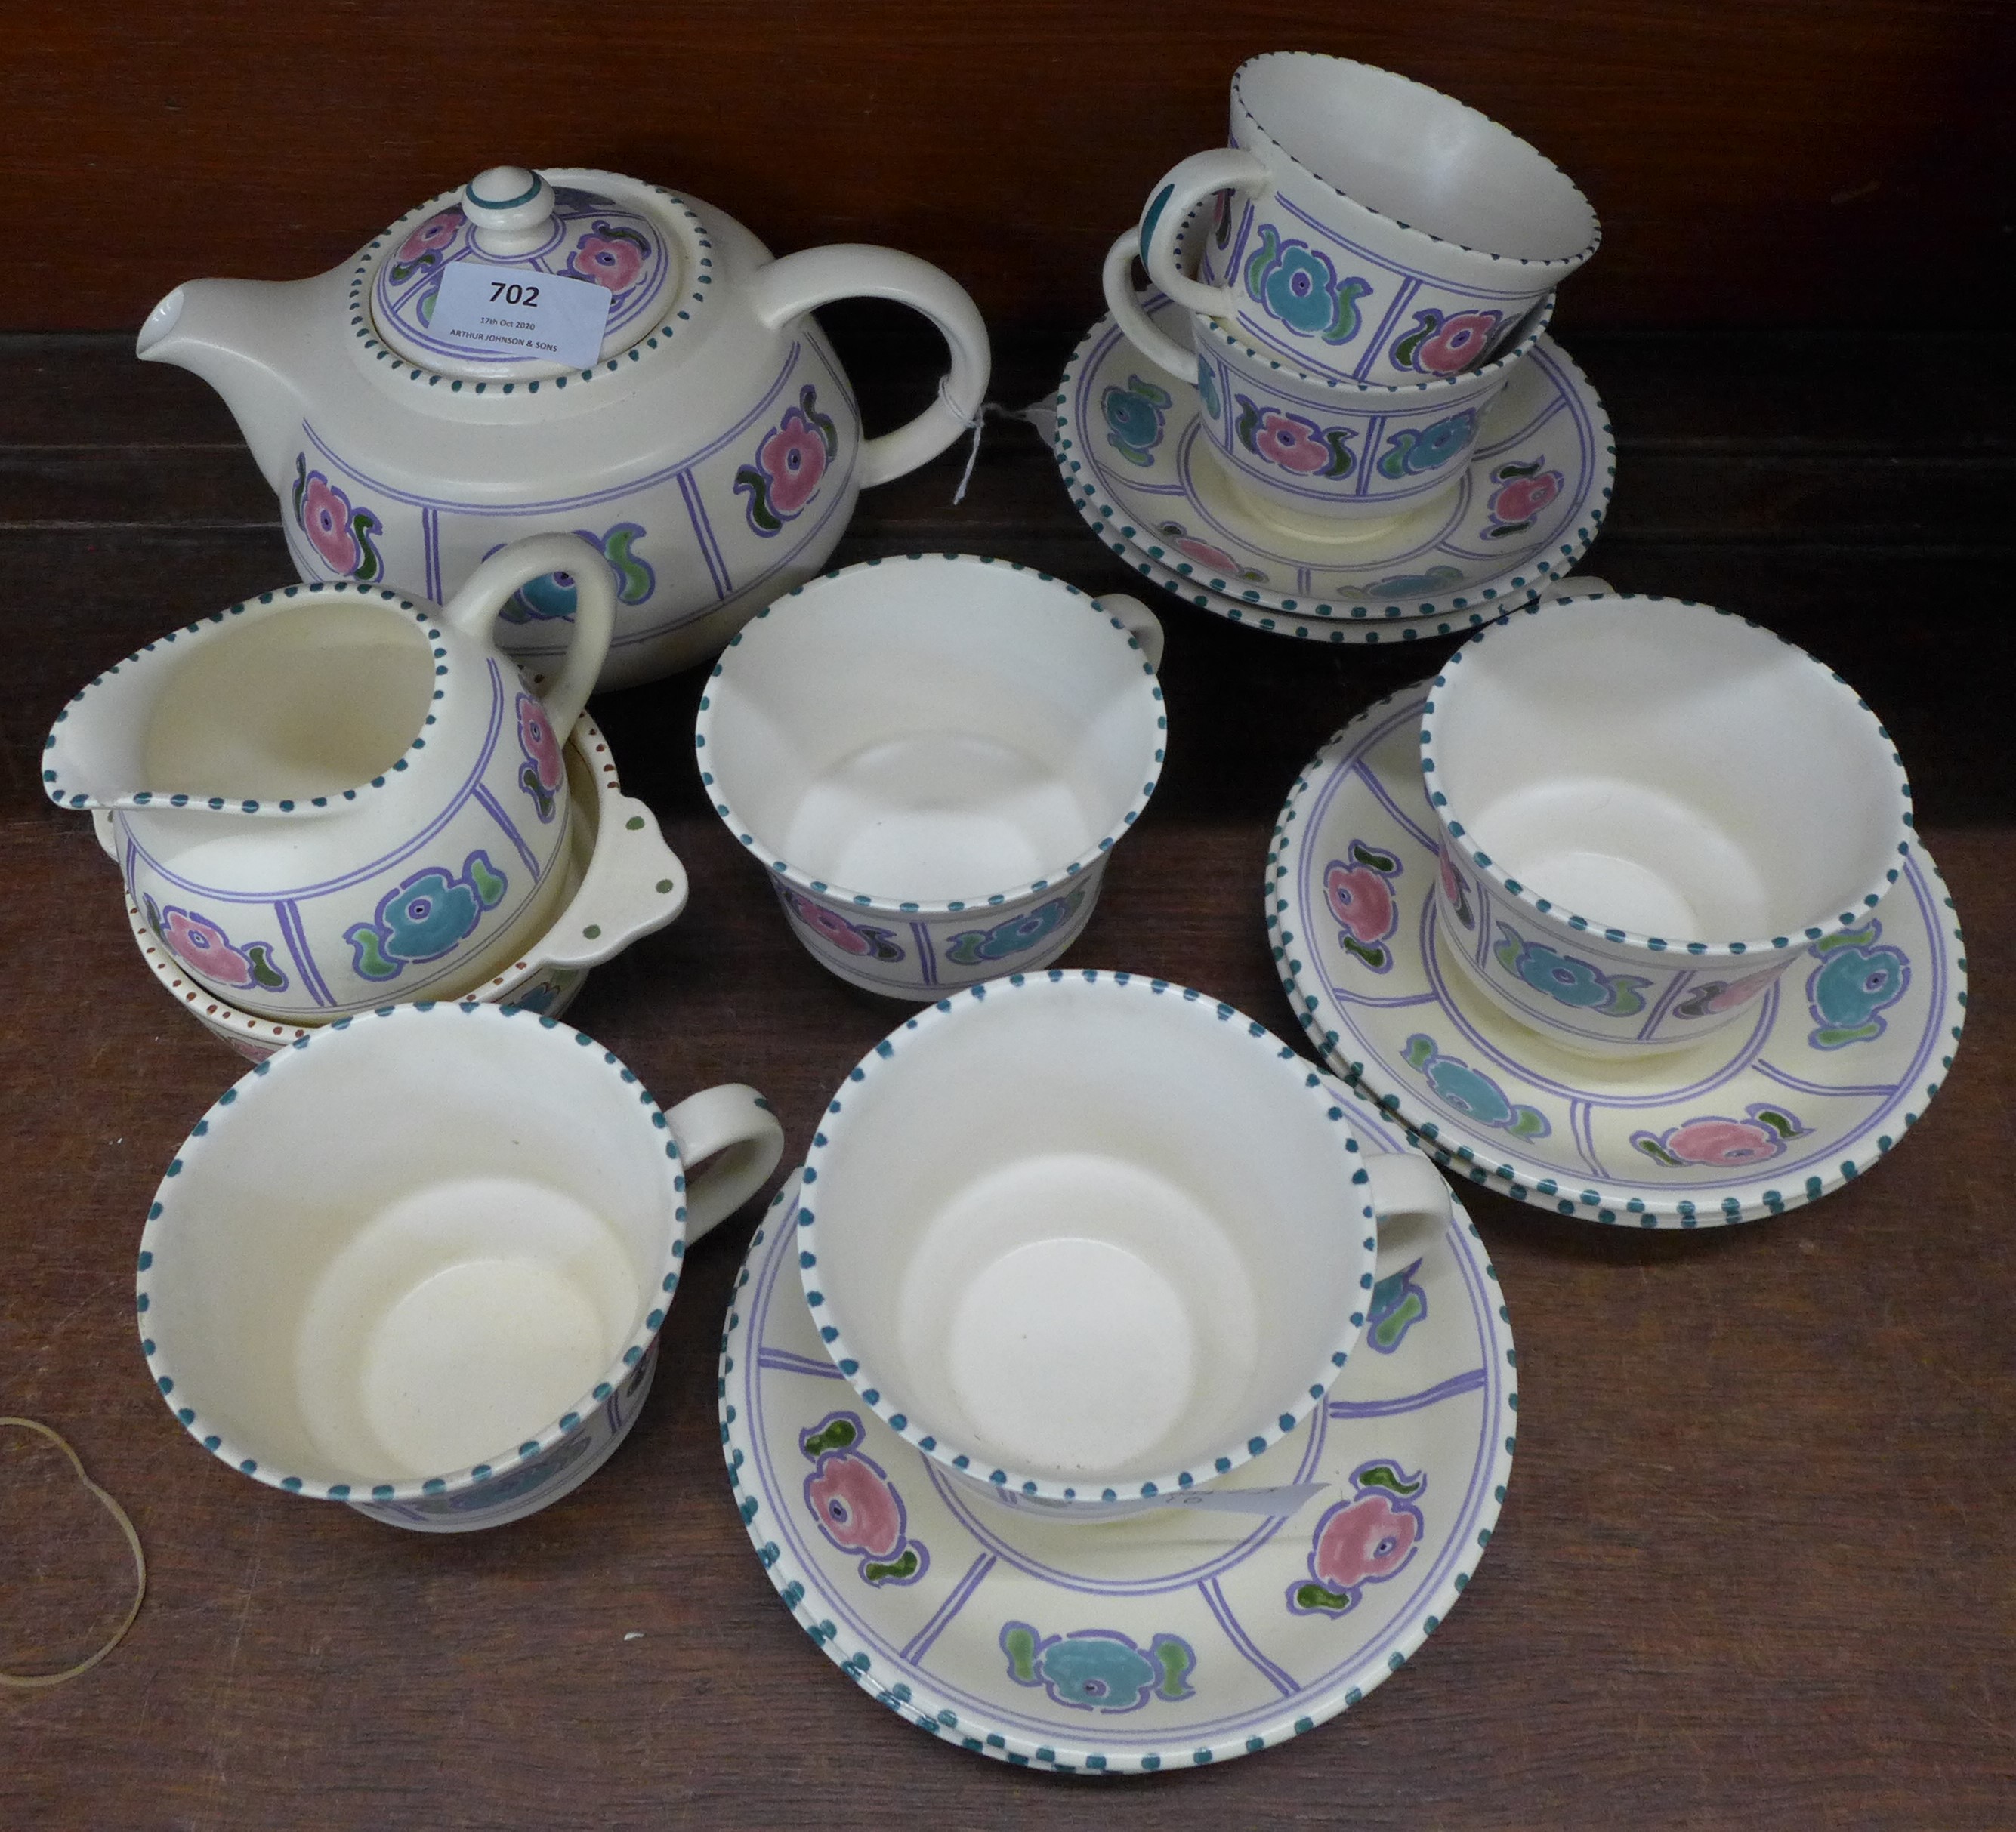 Honiton Pottery; a six setting tea service, designed by Milton